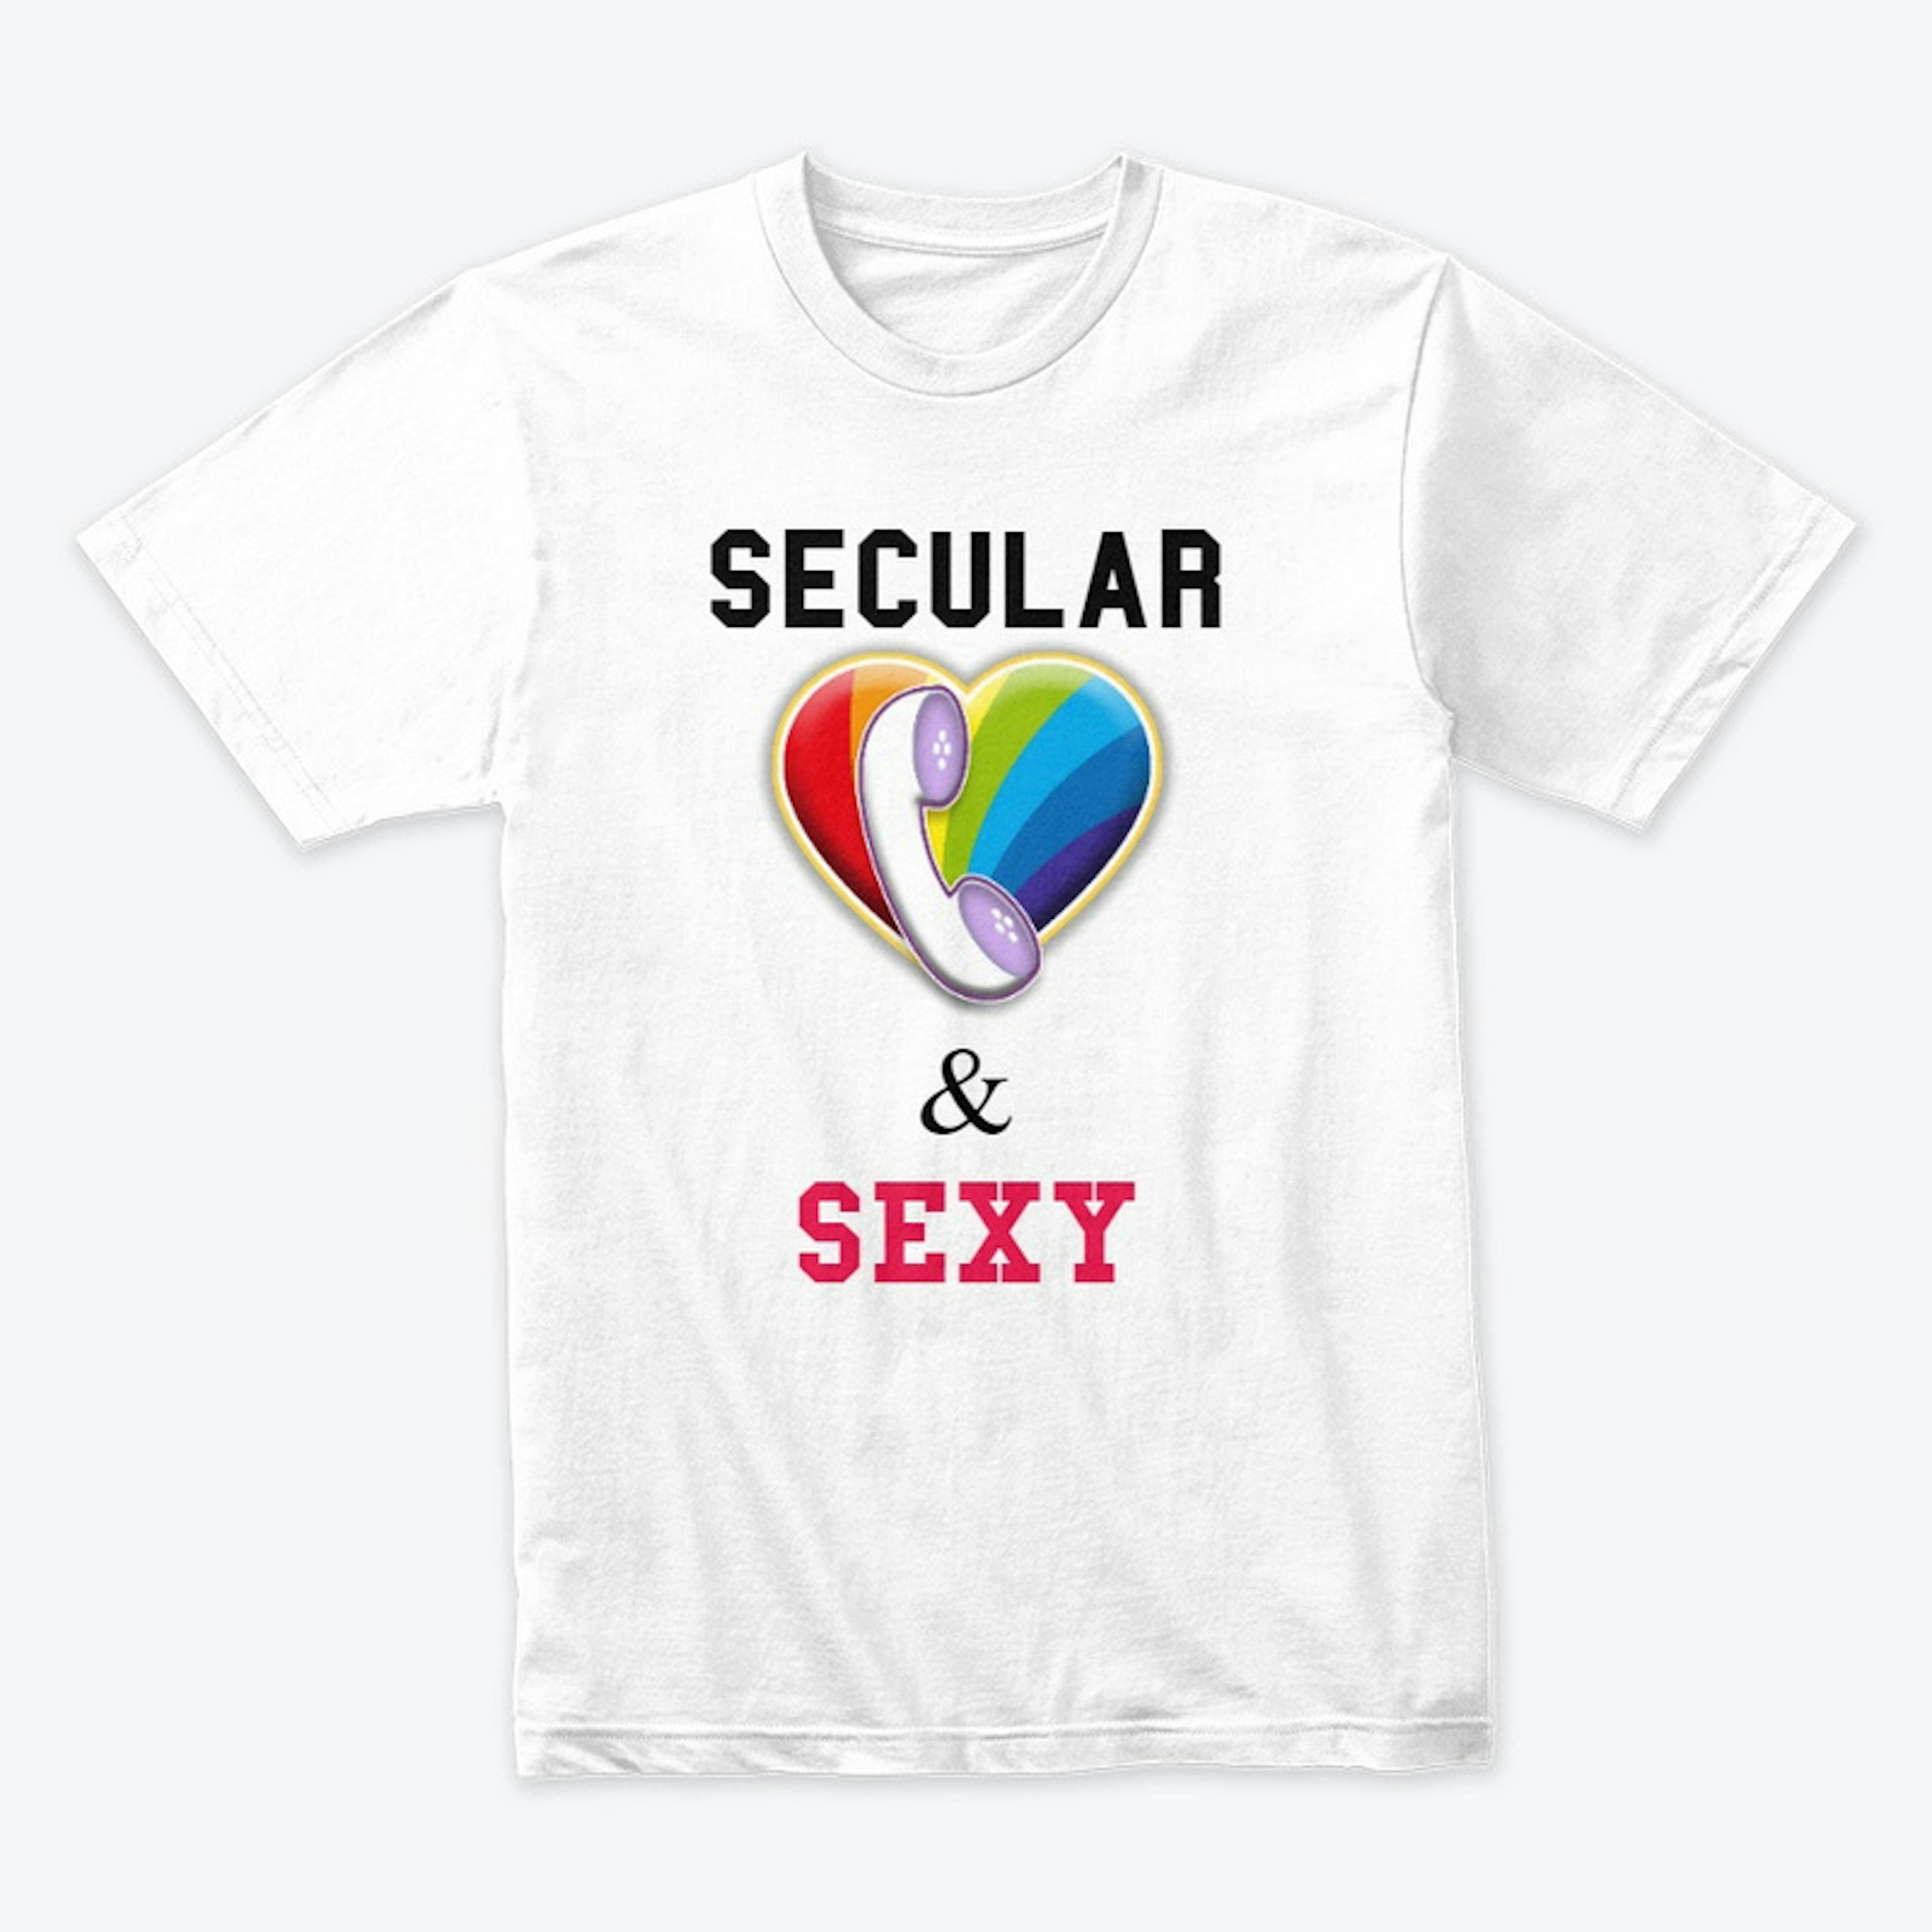 Secular & Sexy - White